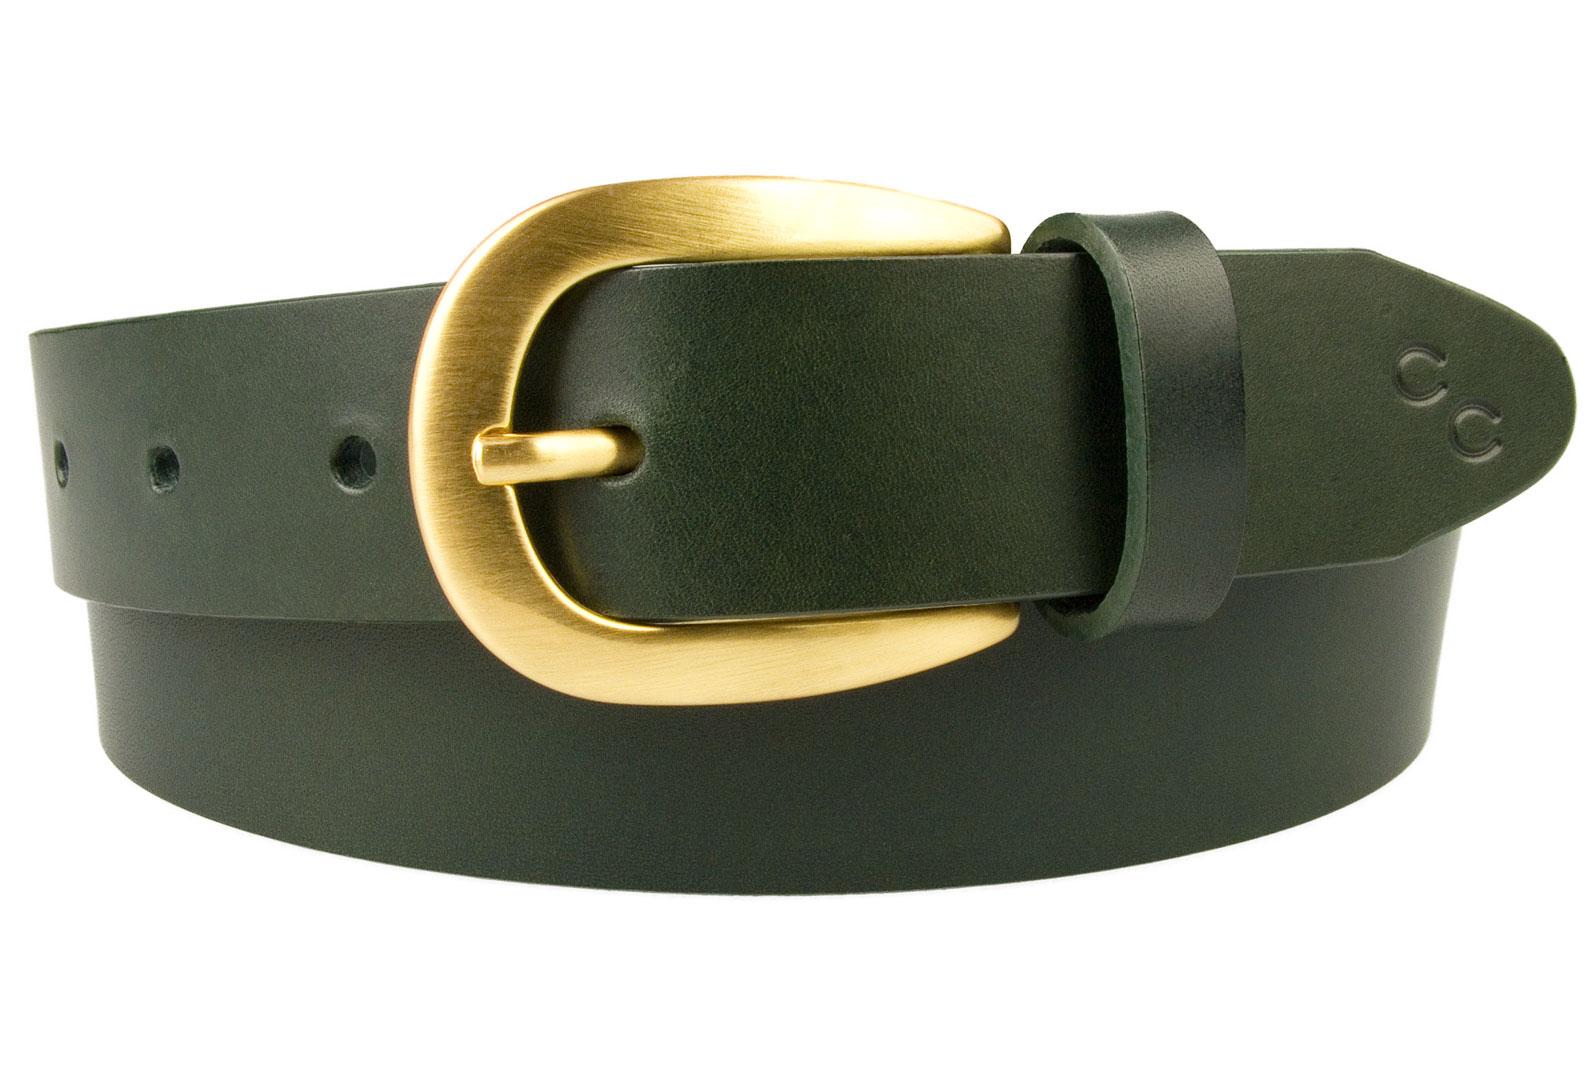 Ladies Green Leather Belt Gold Plated Buckle - Belt Designs